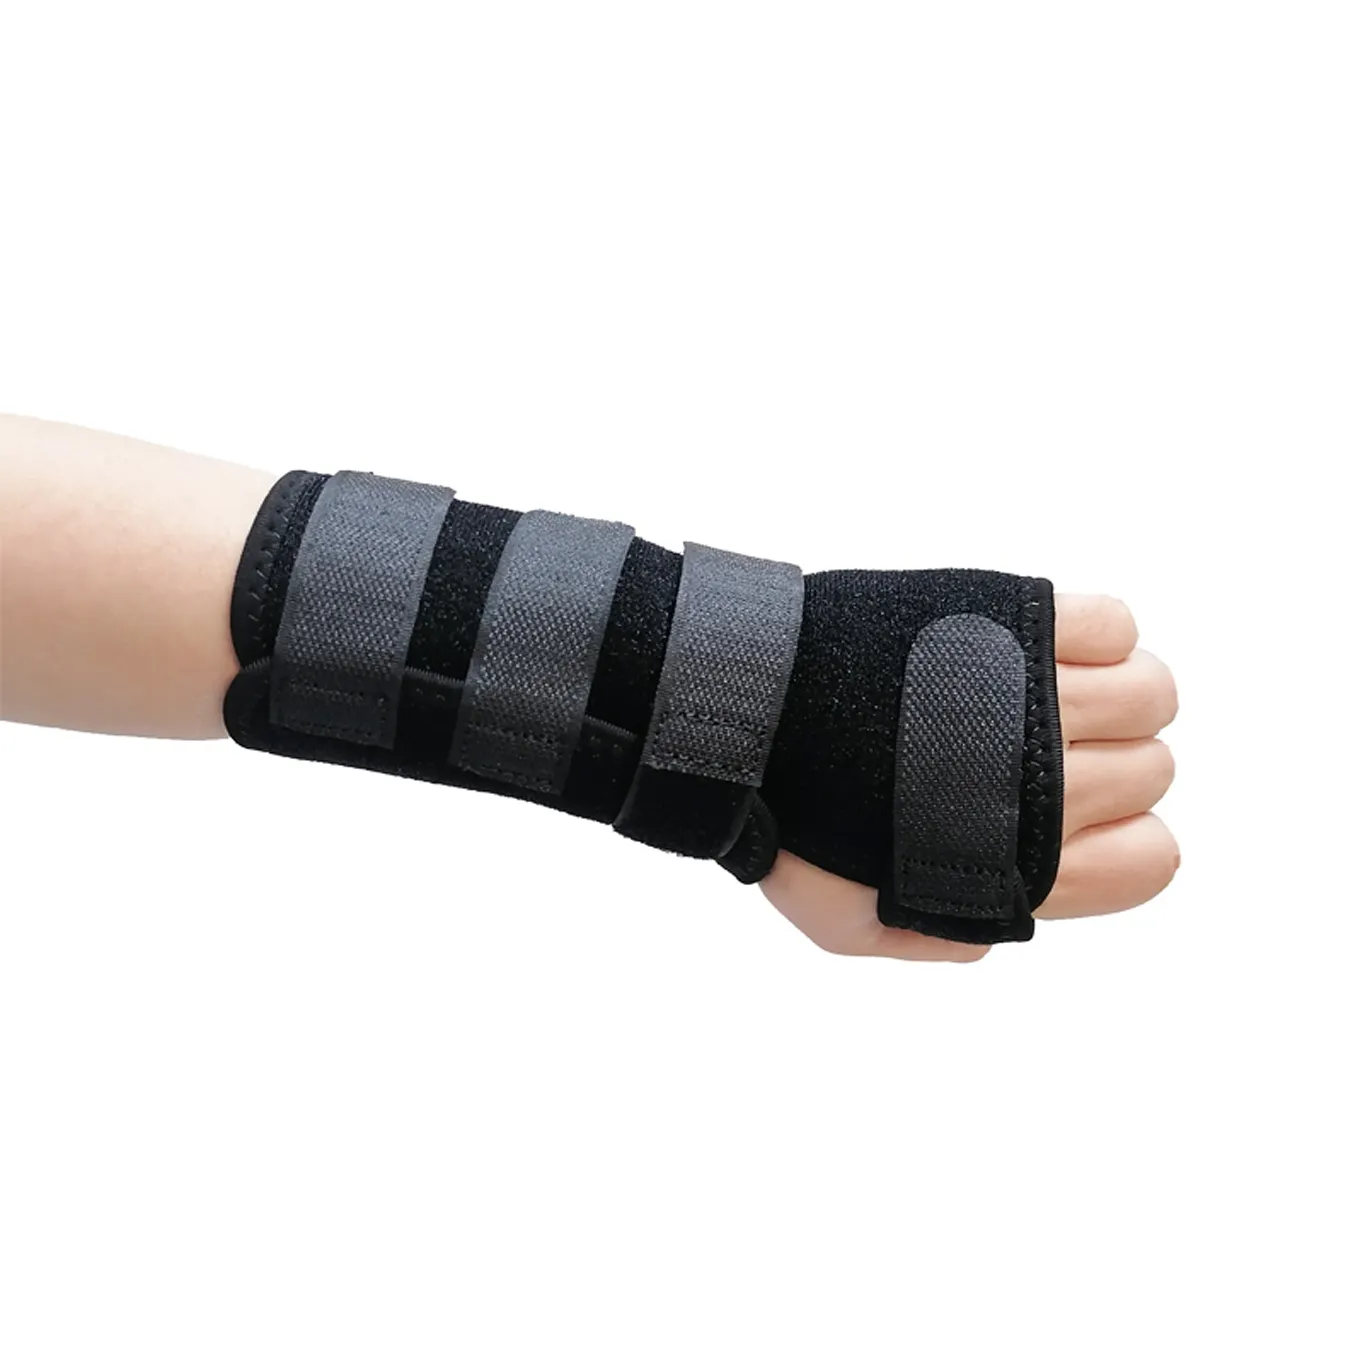 Adjustable Orthopedic Medical Neoprene Wrist Support Hand Brace Band Carpal Tunnel Splint